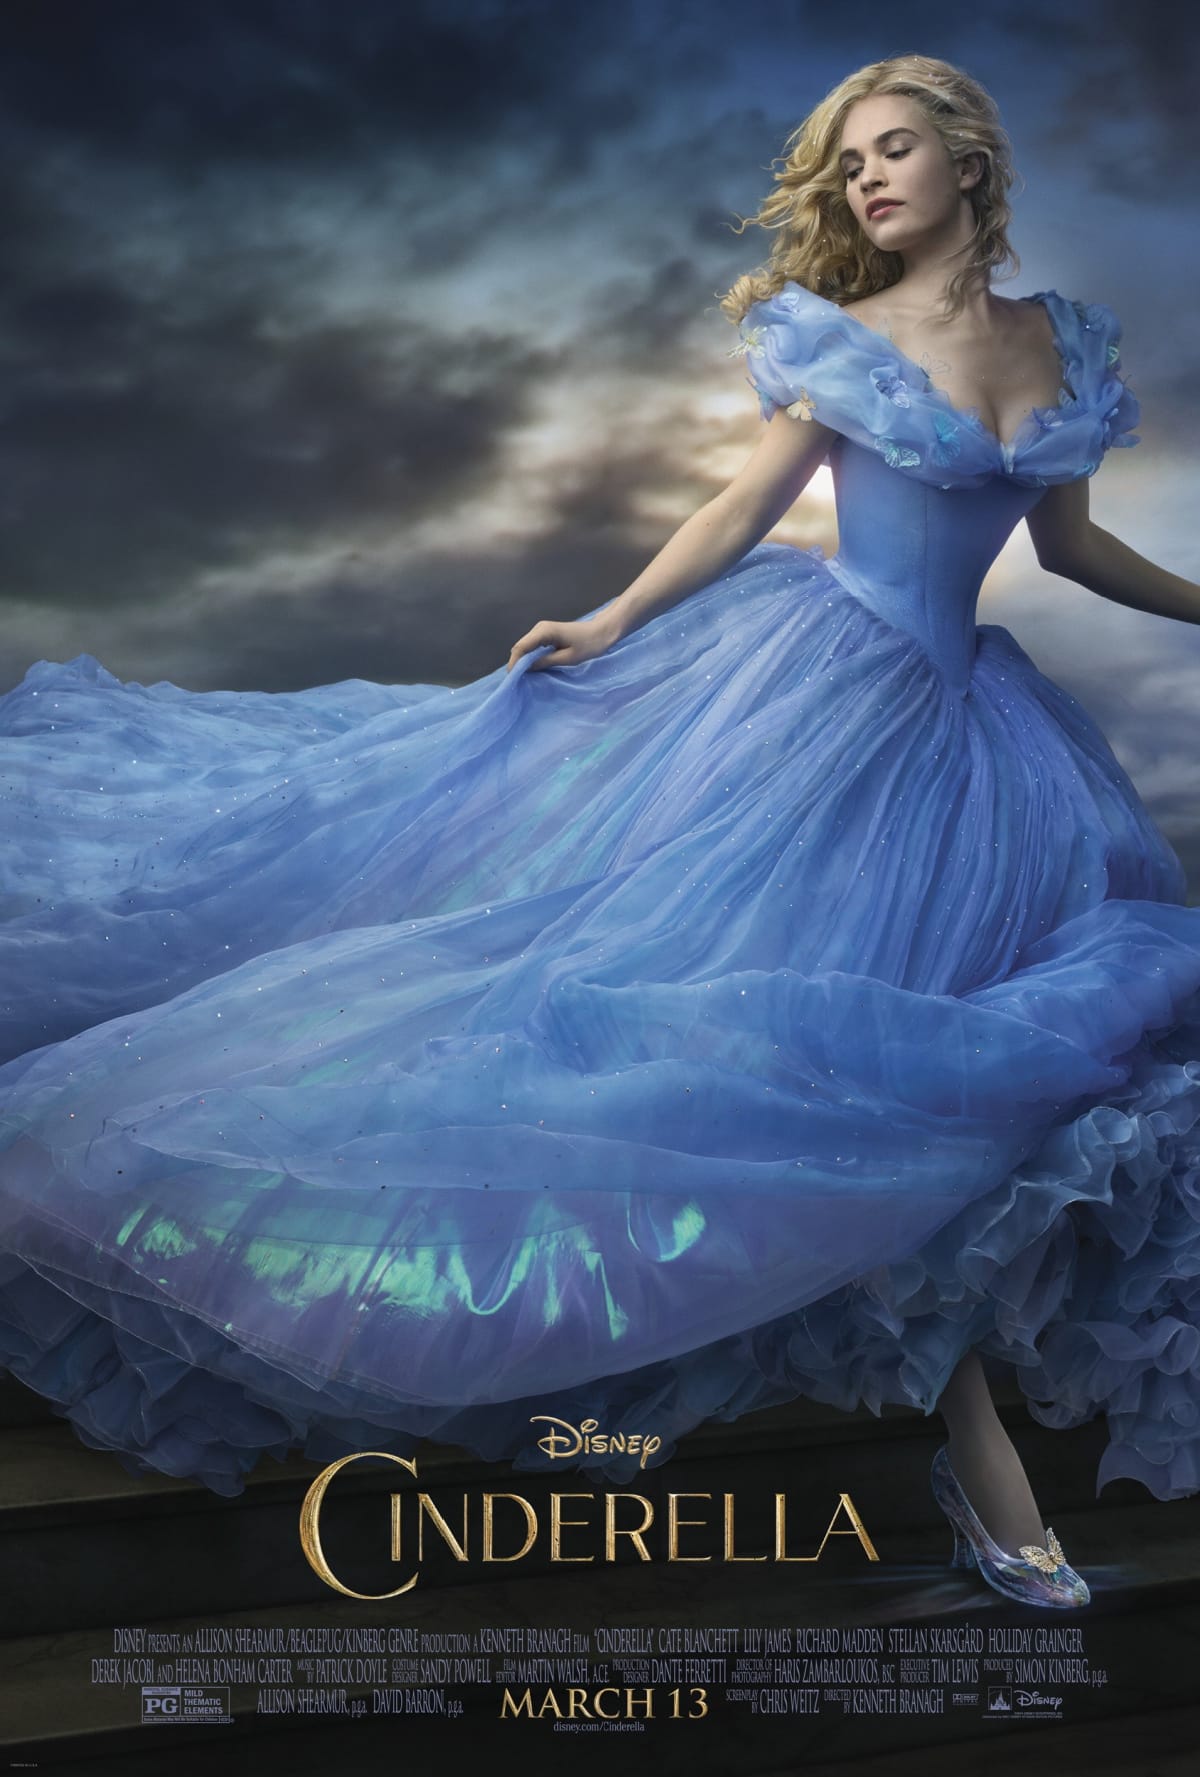 Movie poster for the live action Disney princess movie Cinderella